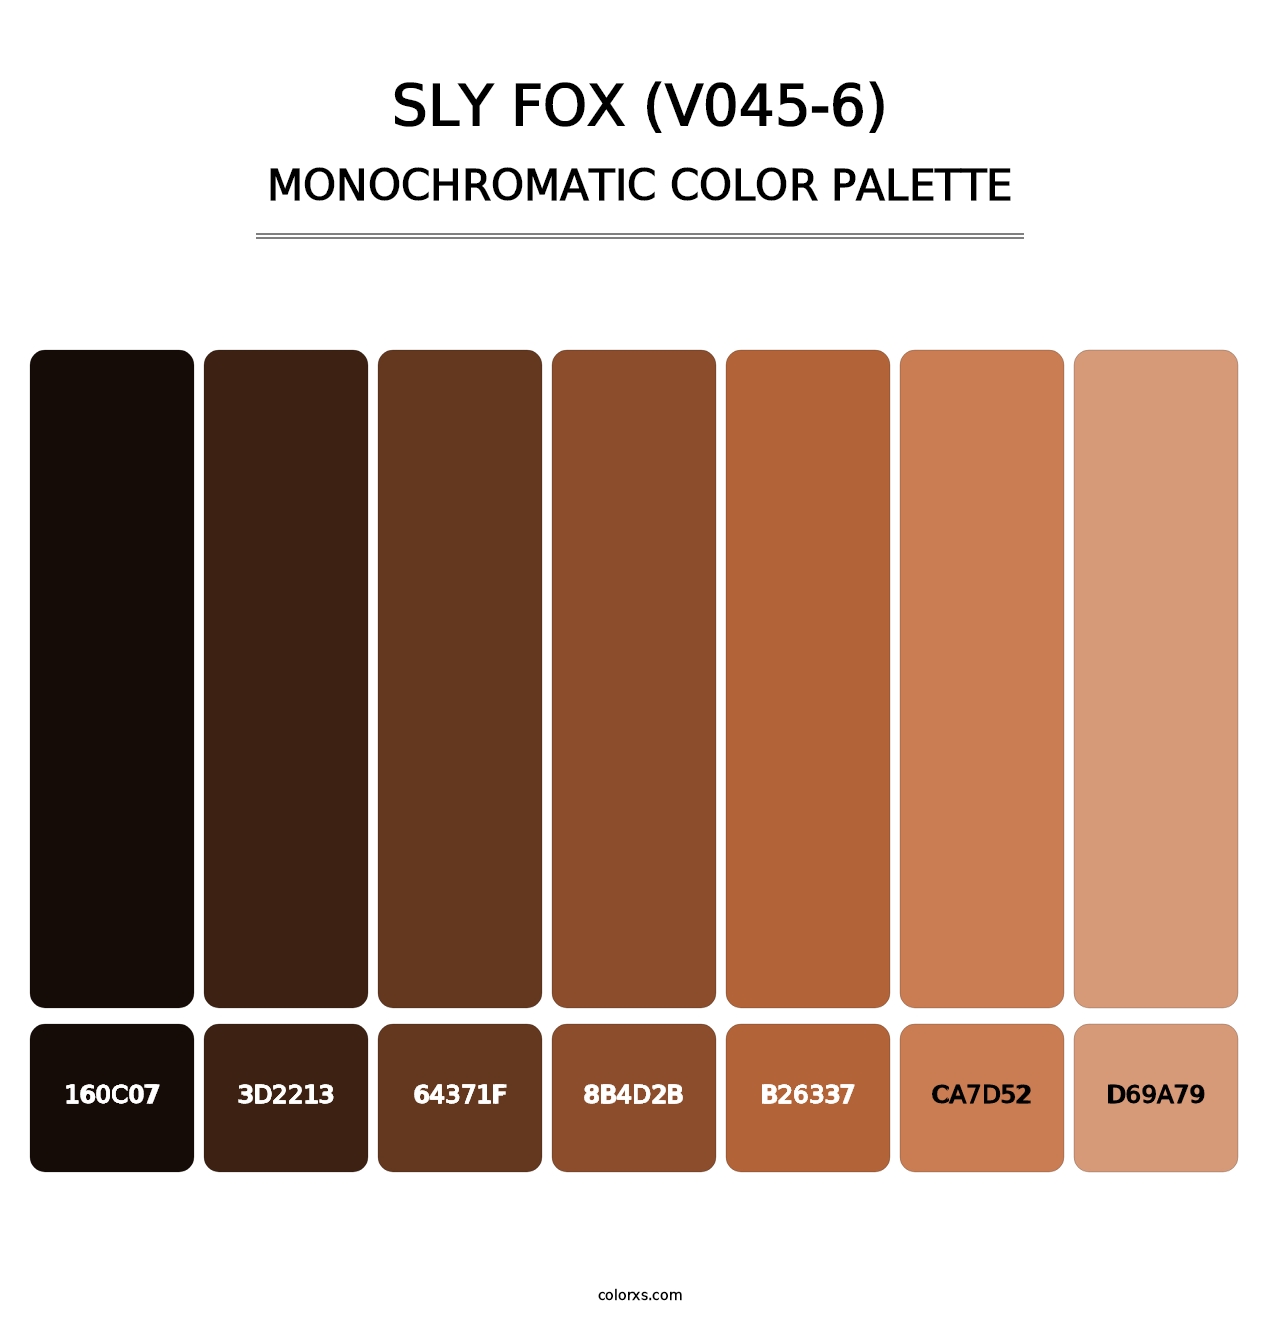 Sly Fox (V045-6) - Monochromatic Color Palette